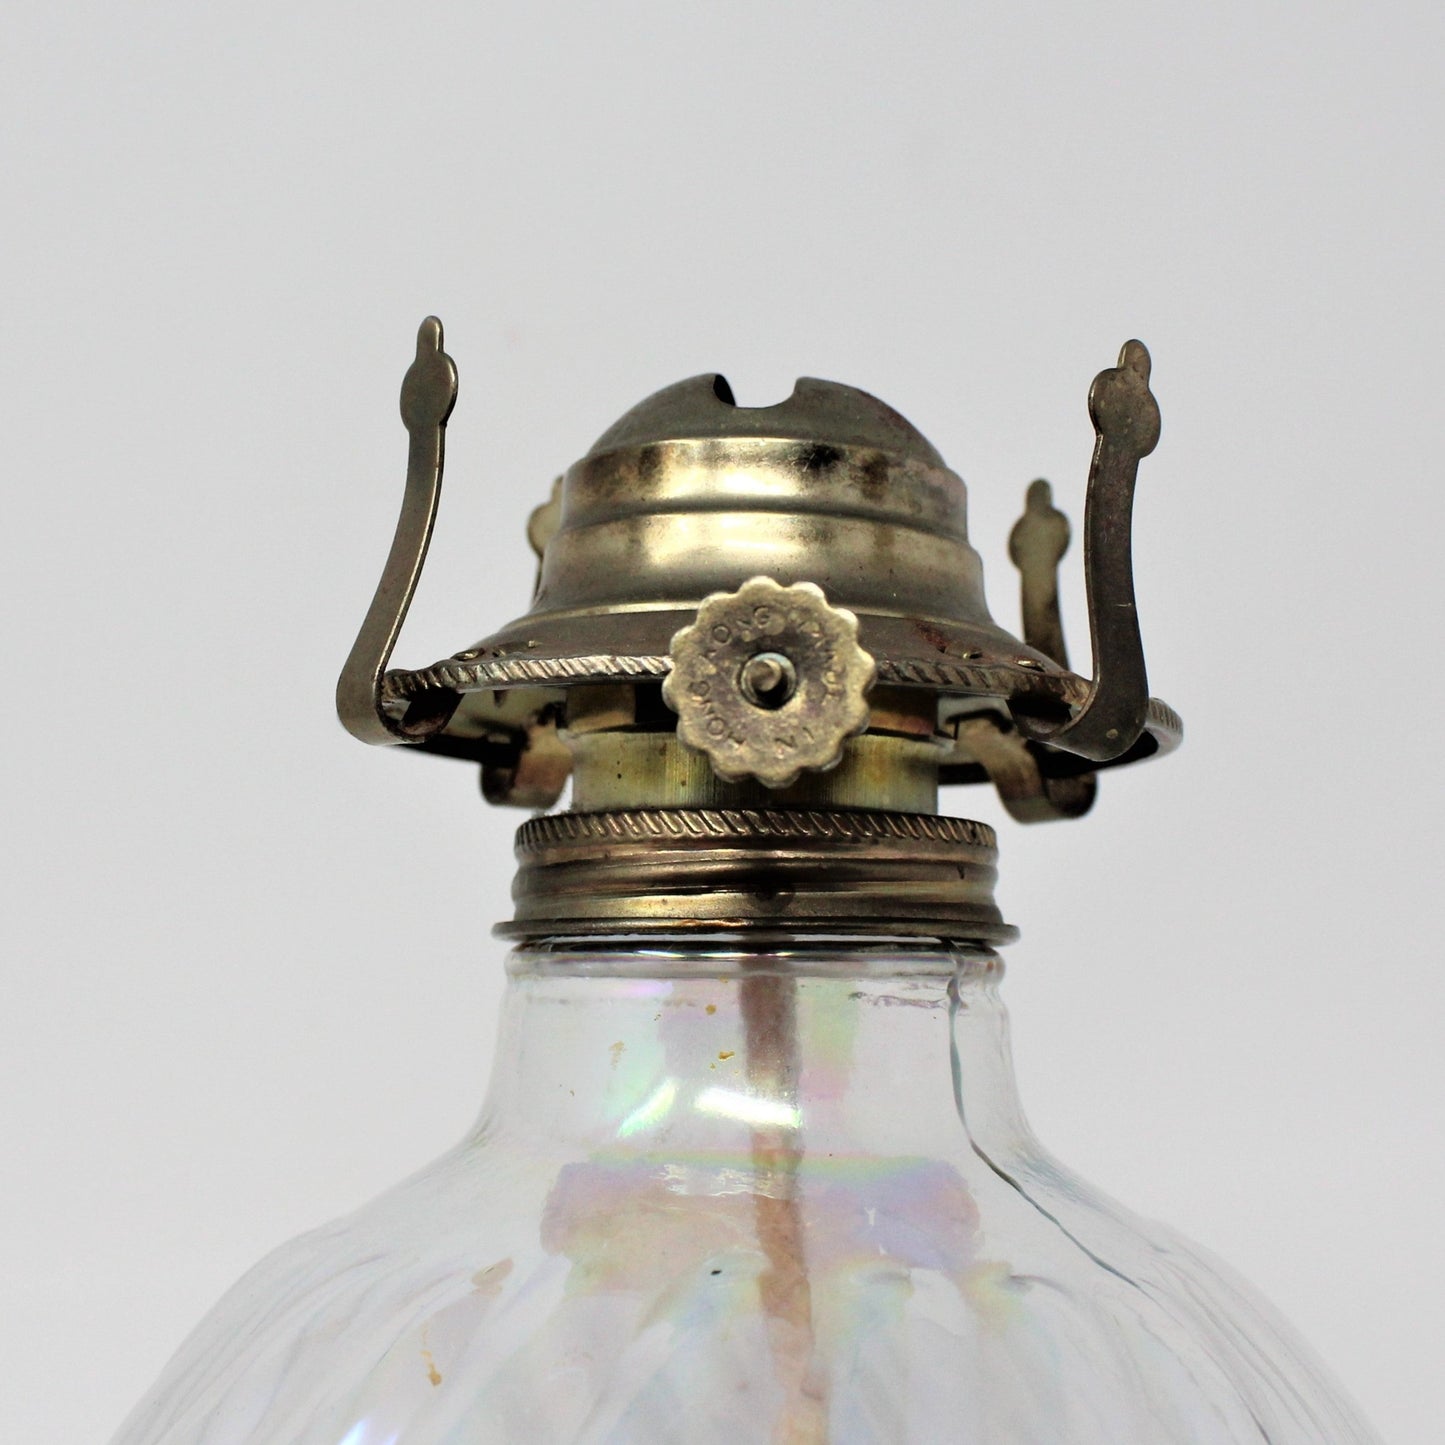 Oil Lamp, Iridescent Swirled Glass, Hong Kong, Vintage